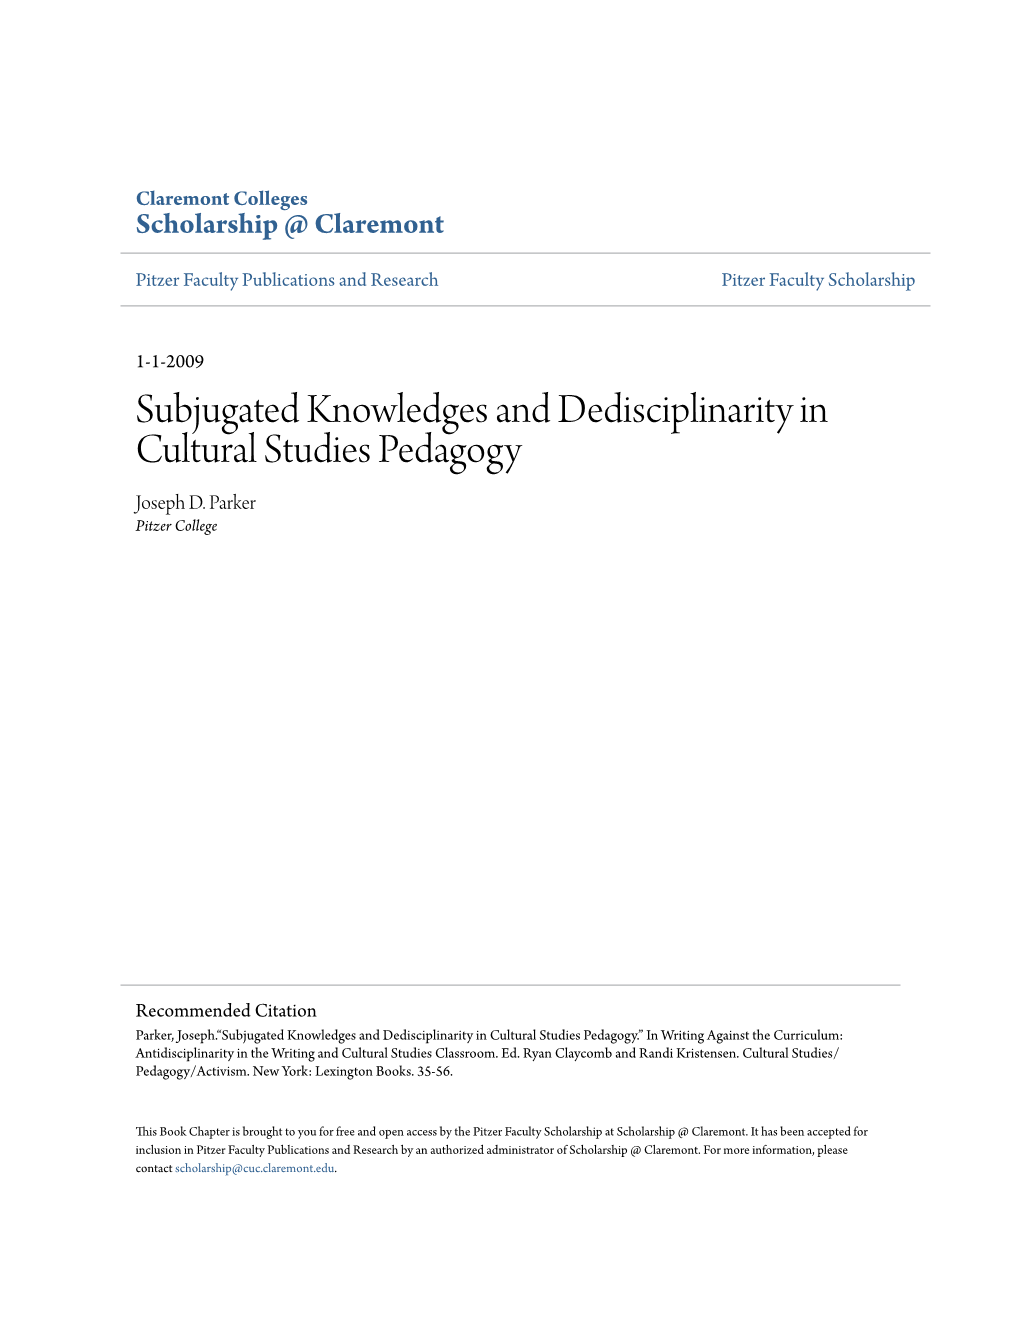 Subjugated Knowledges and Dedisciplinarity in Cultural Studies Pedagogy Joseph D